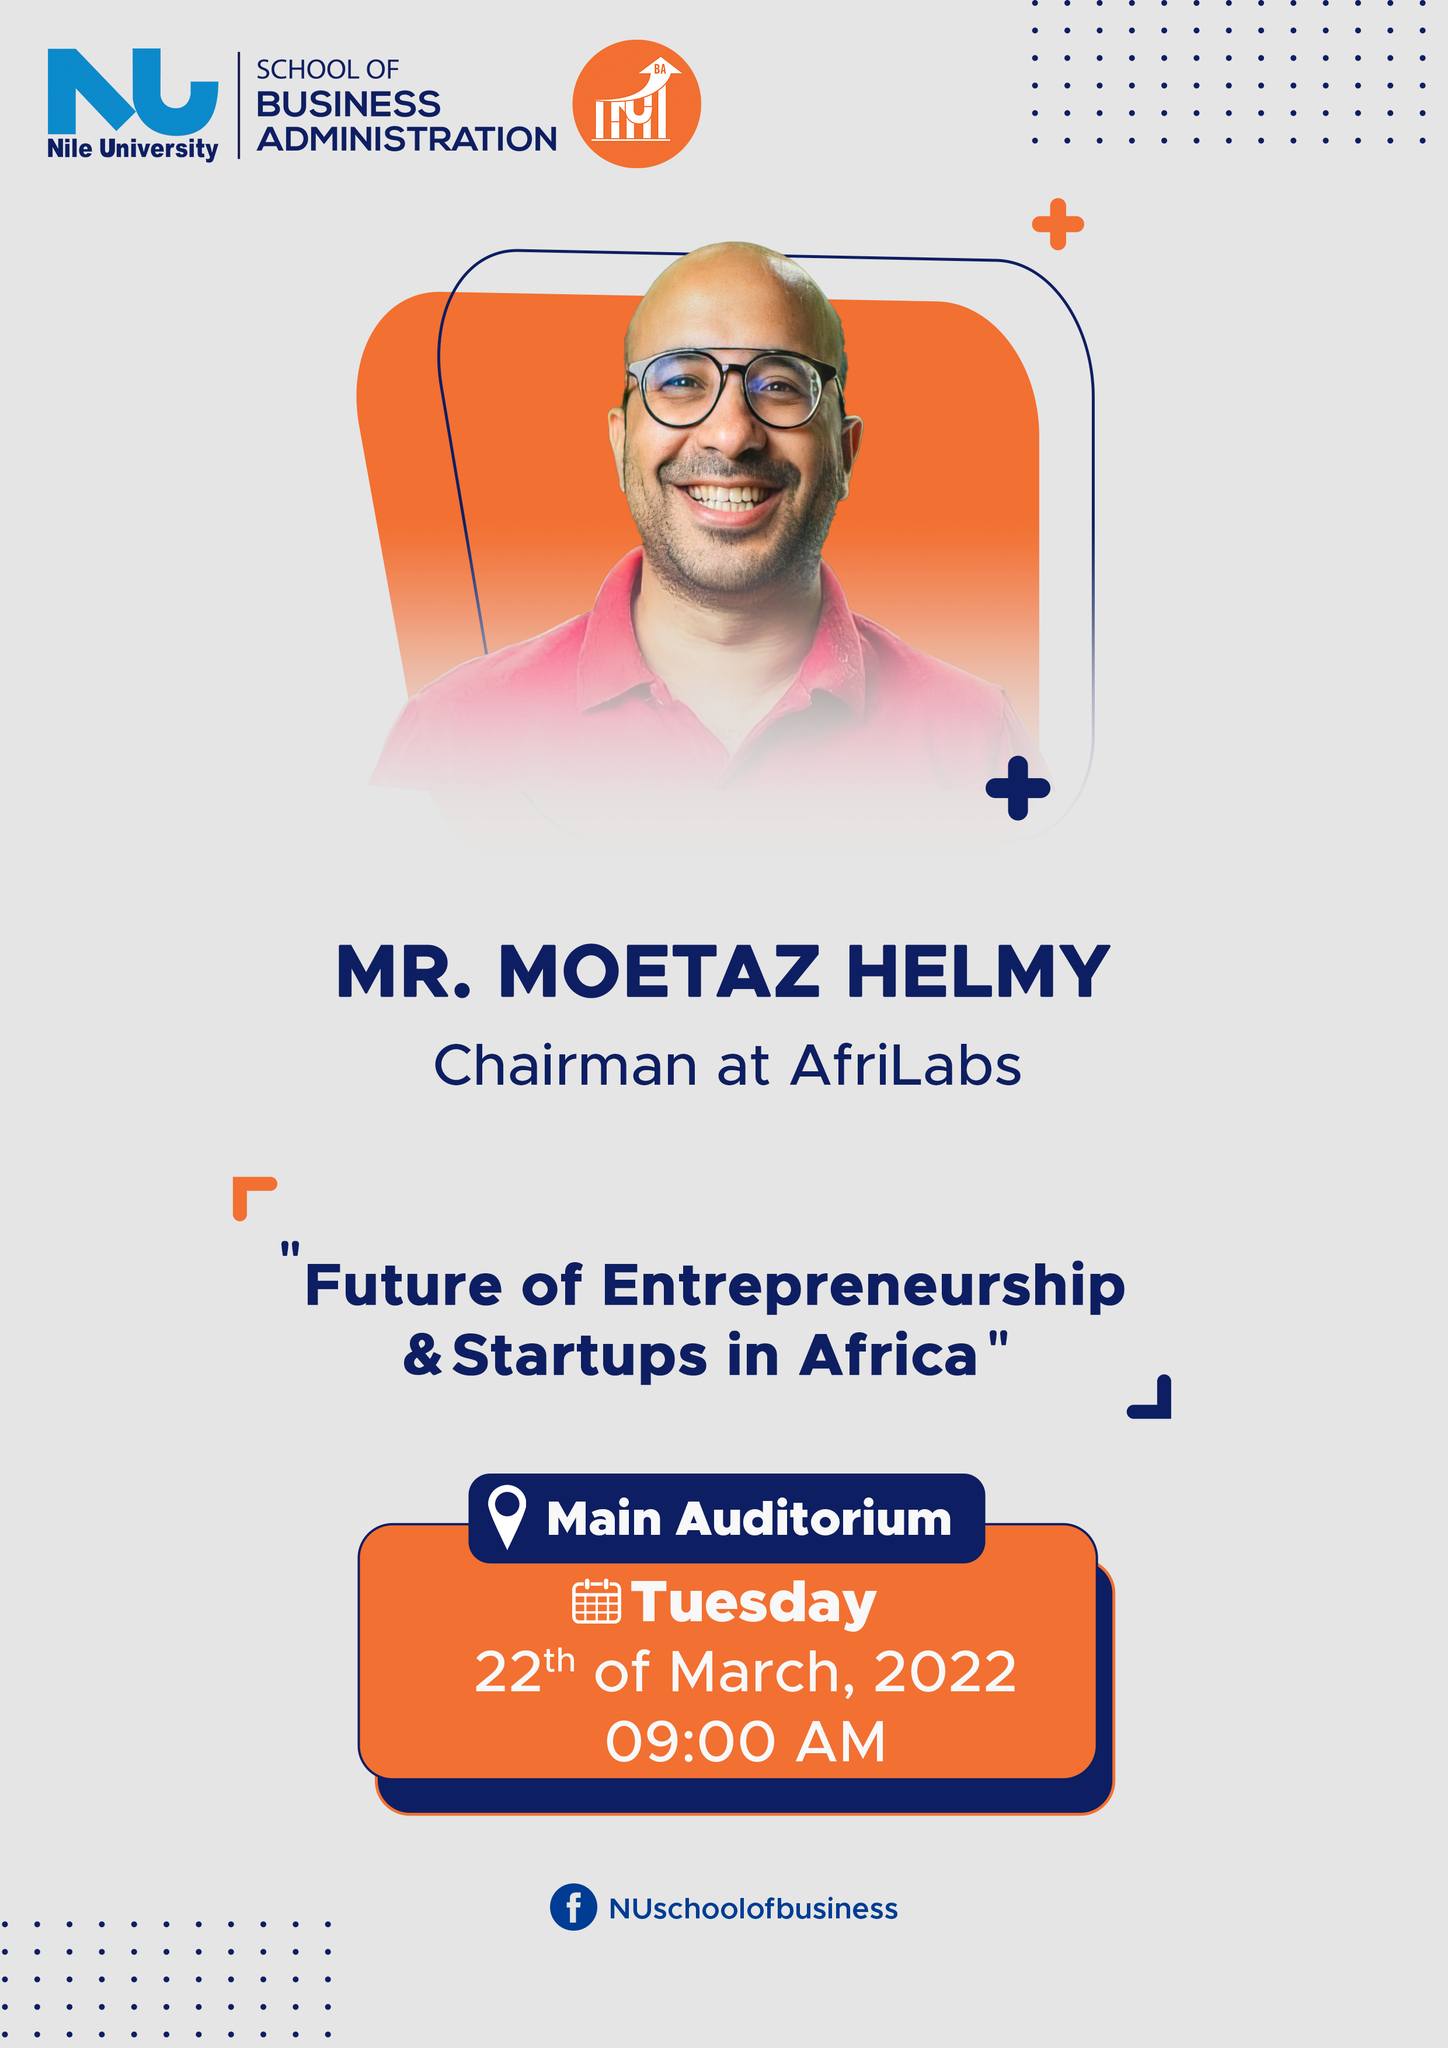 Future of Entrepreneurship & startups in Africa